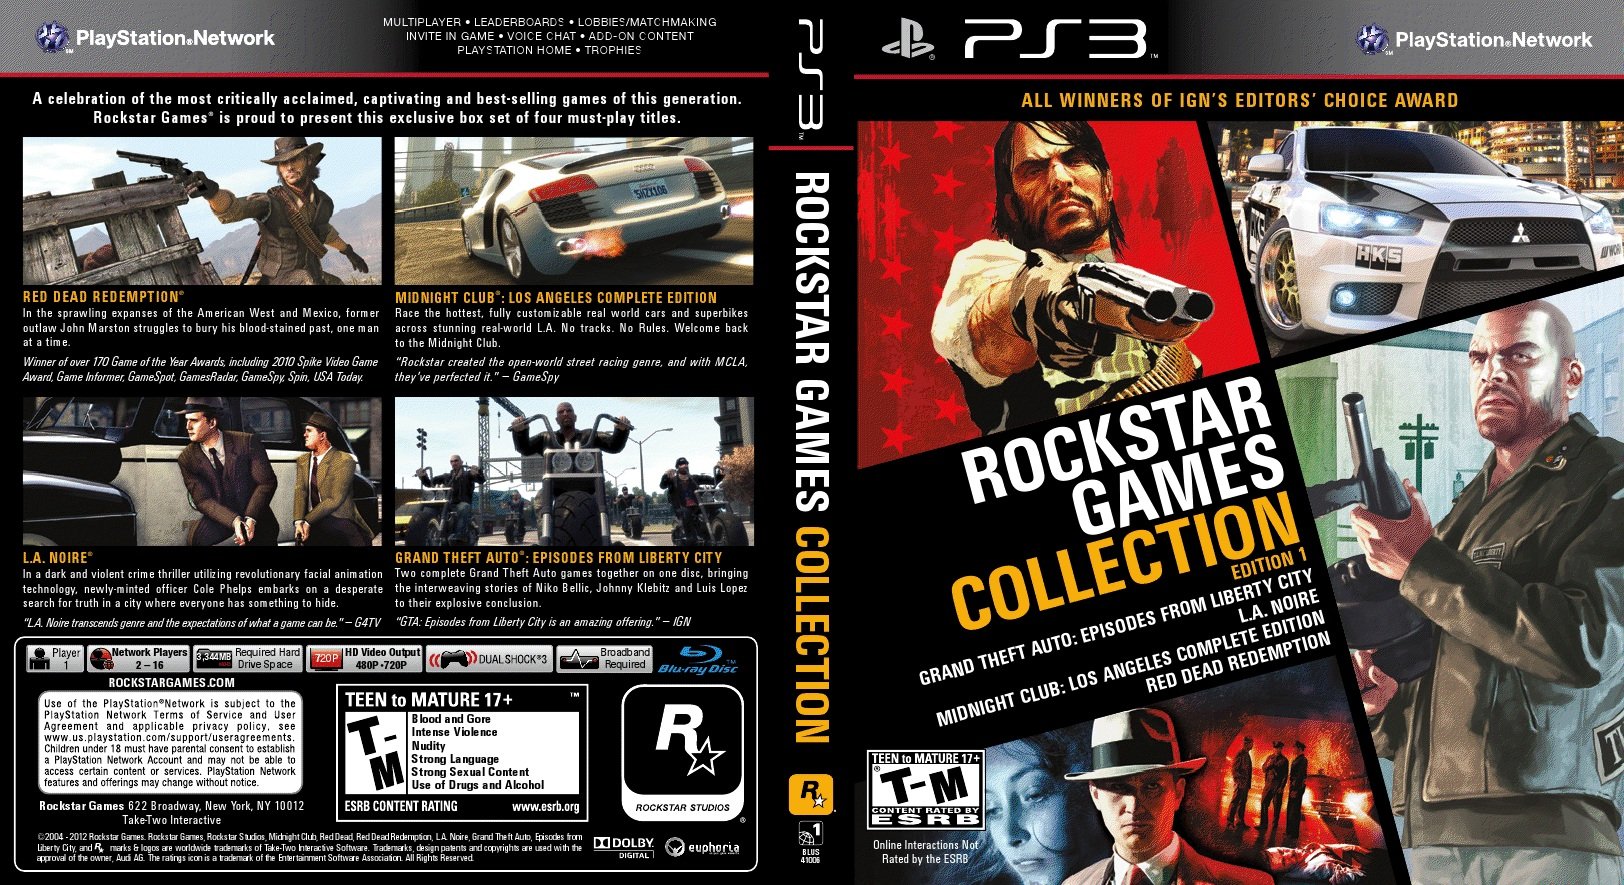 Rockstar Games Collection Edition 1 ???!!!!